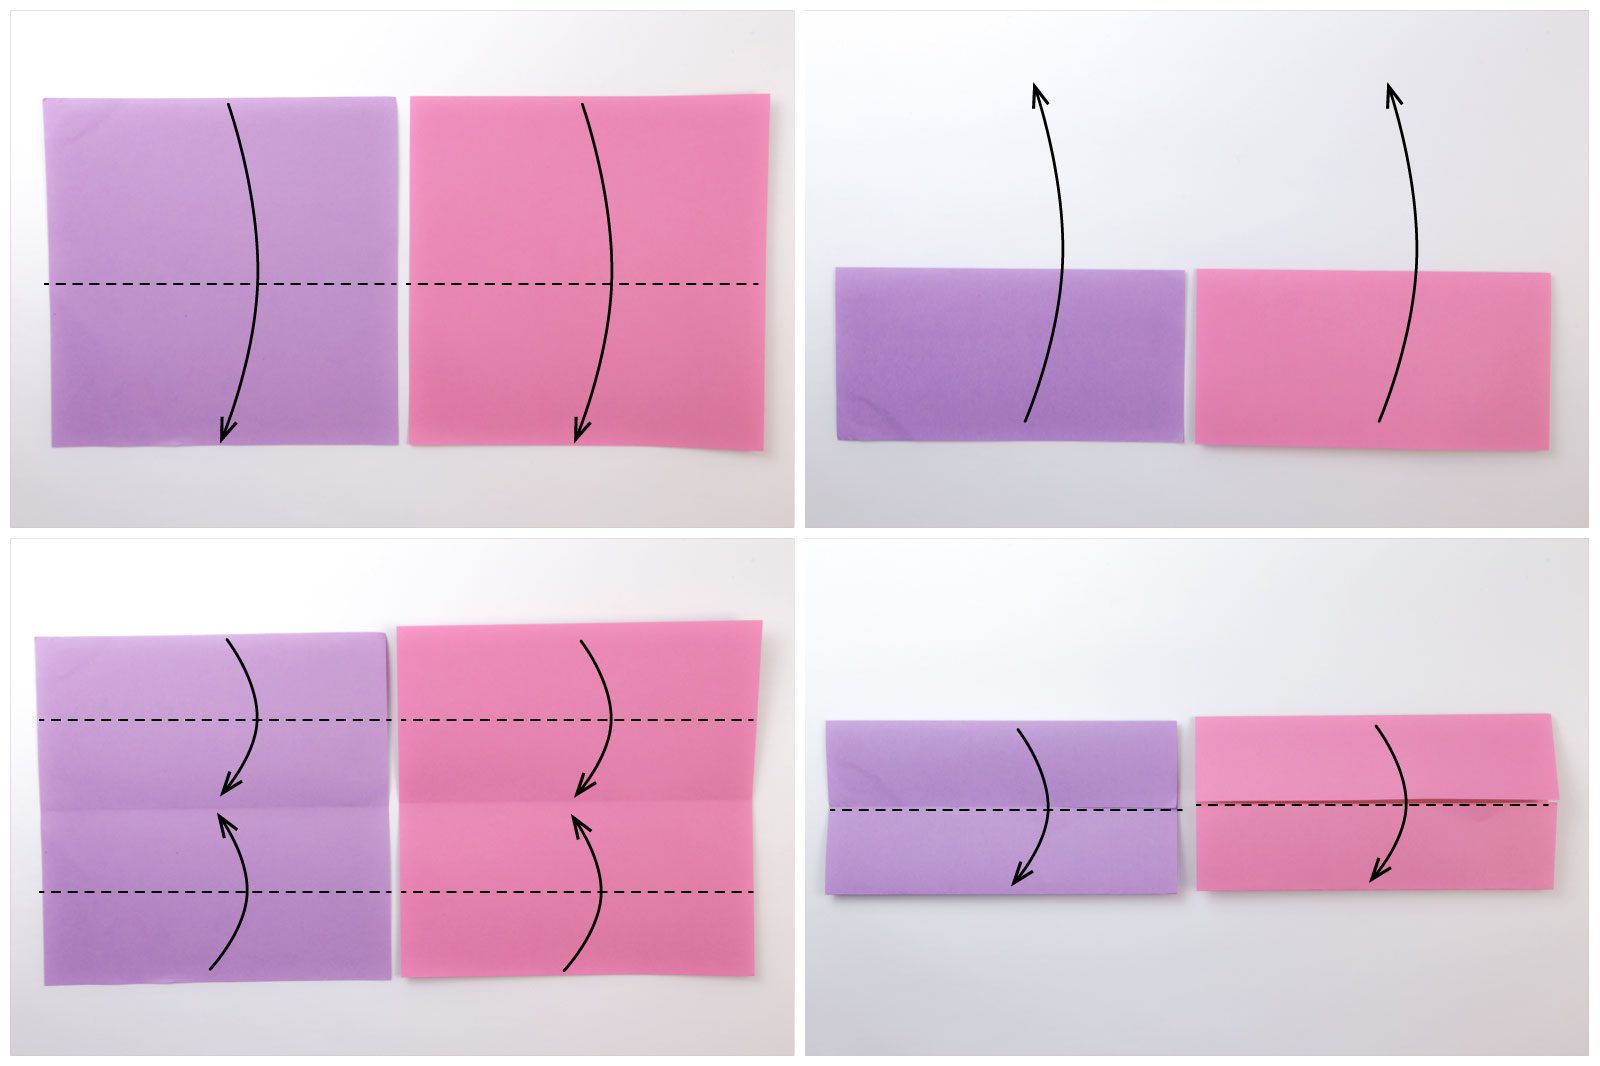 How to make an Origami Ninja Star easily (step-by-step photos) - The Purple  Yarn